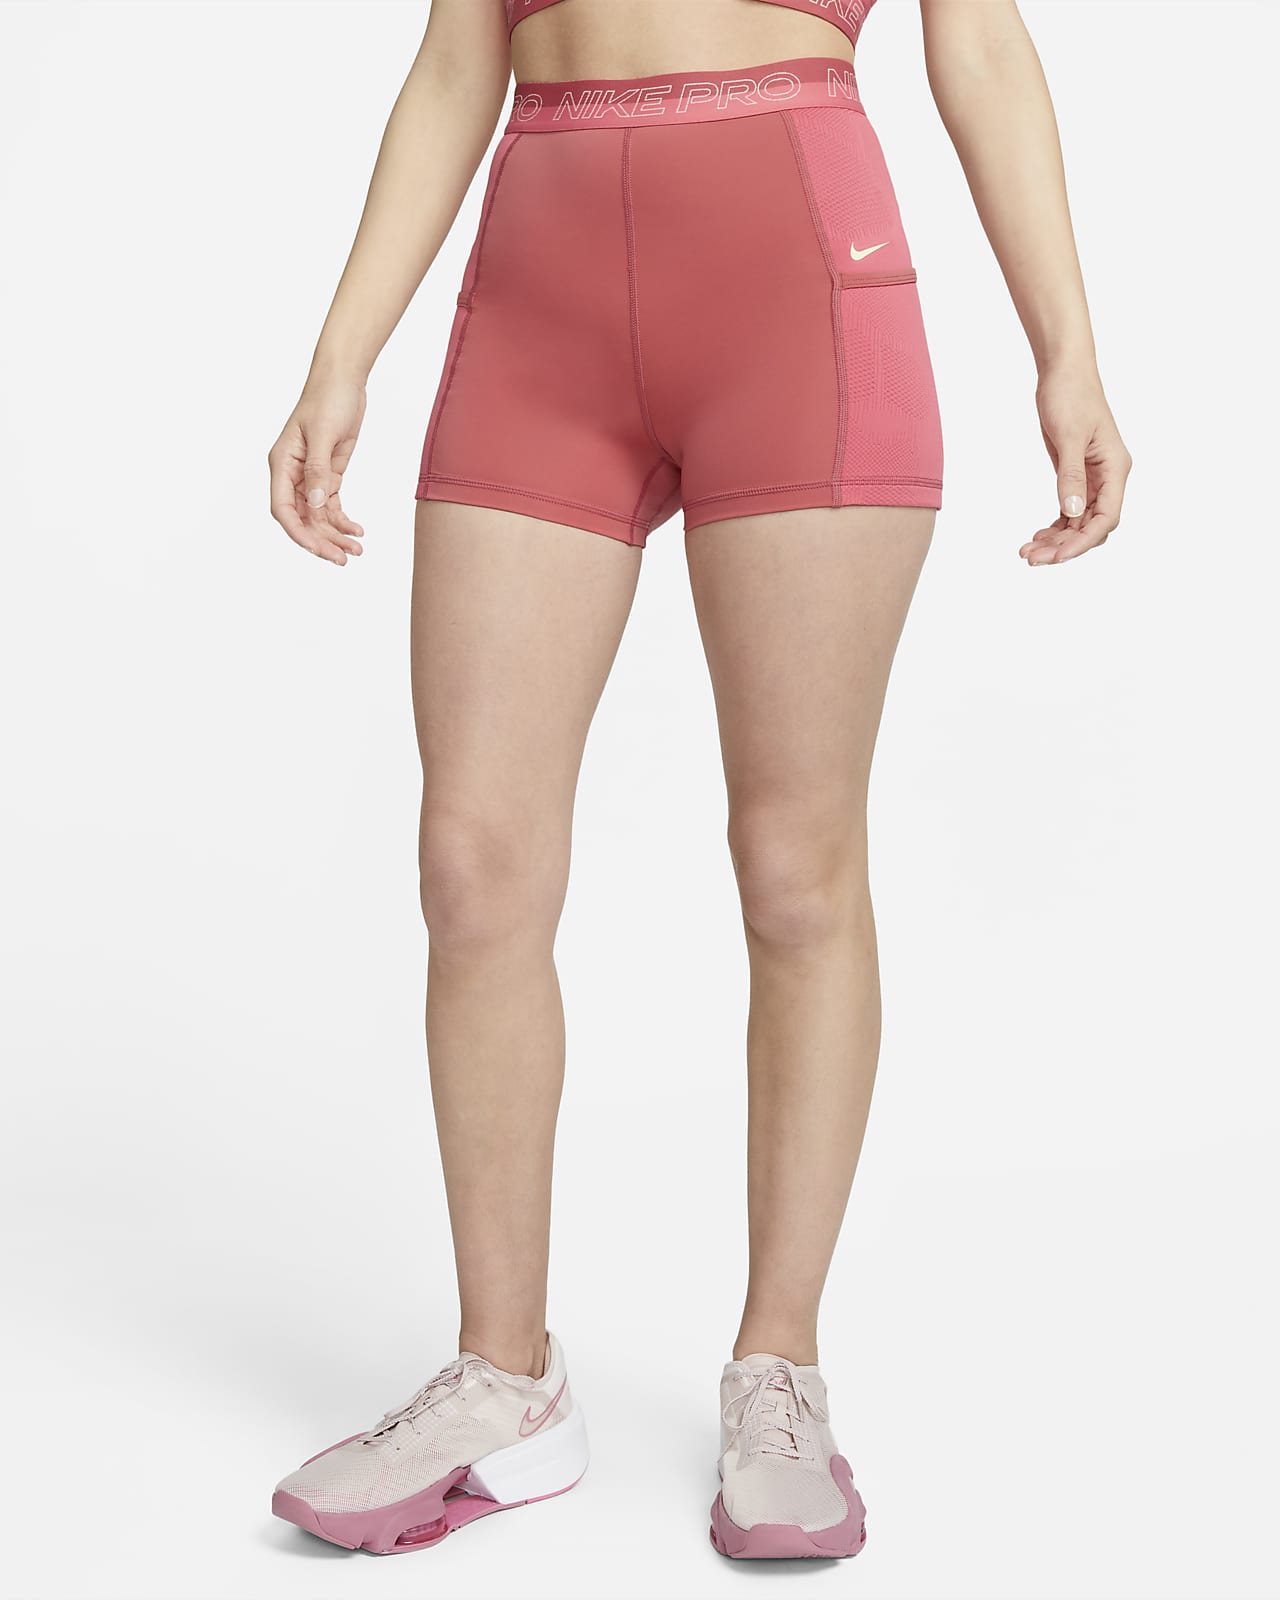 Women's Tight Training & Gym Shorts. Nike SG